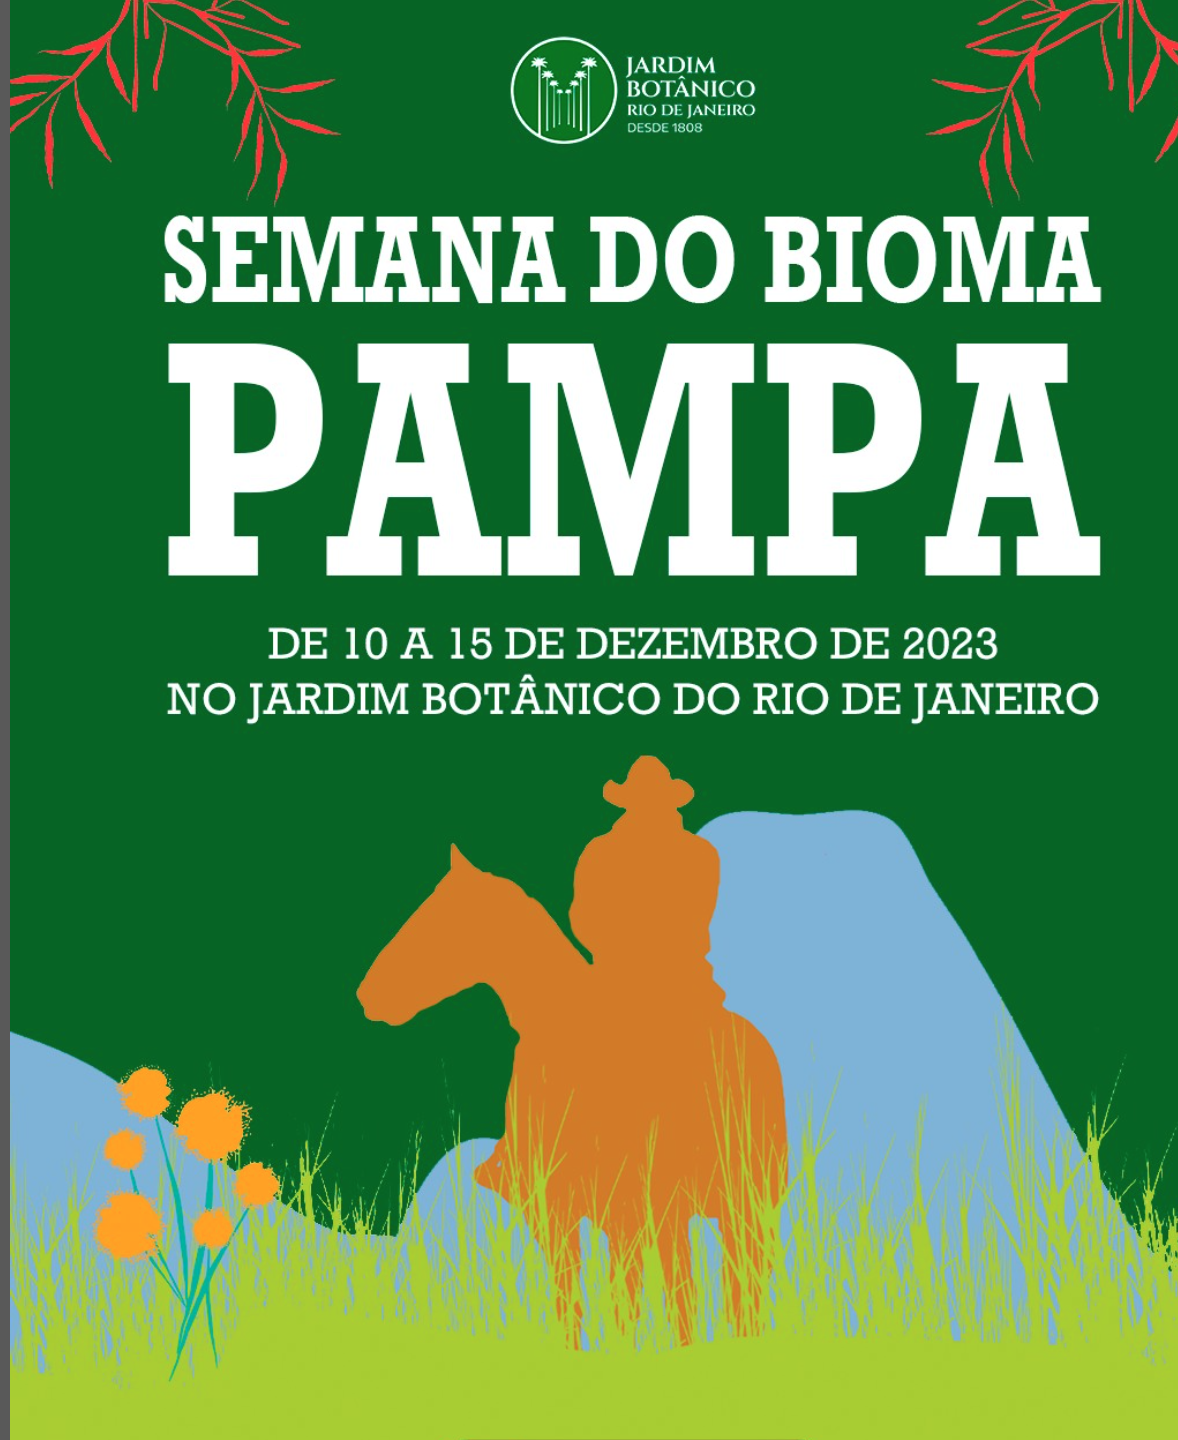 RJ: Semana do Bioma Pampa no Jardim Botânico